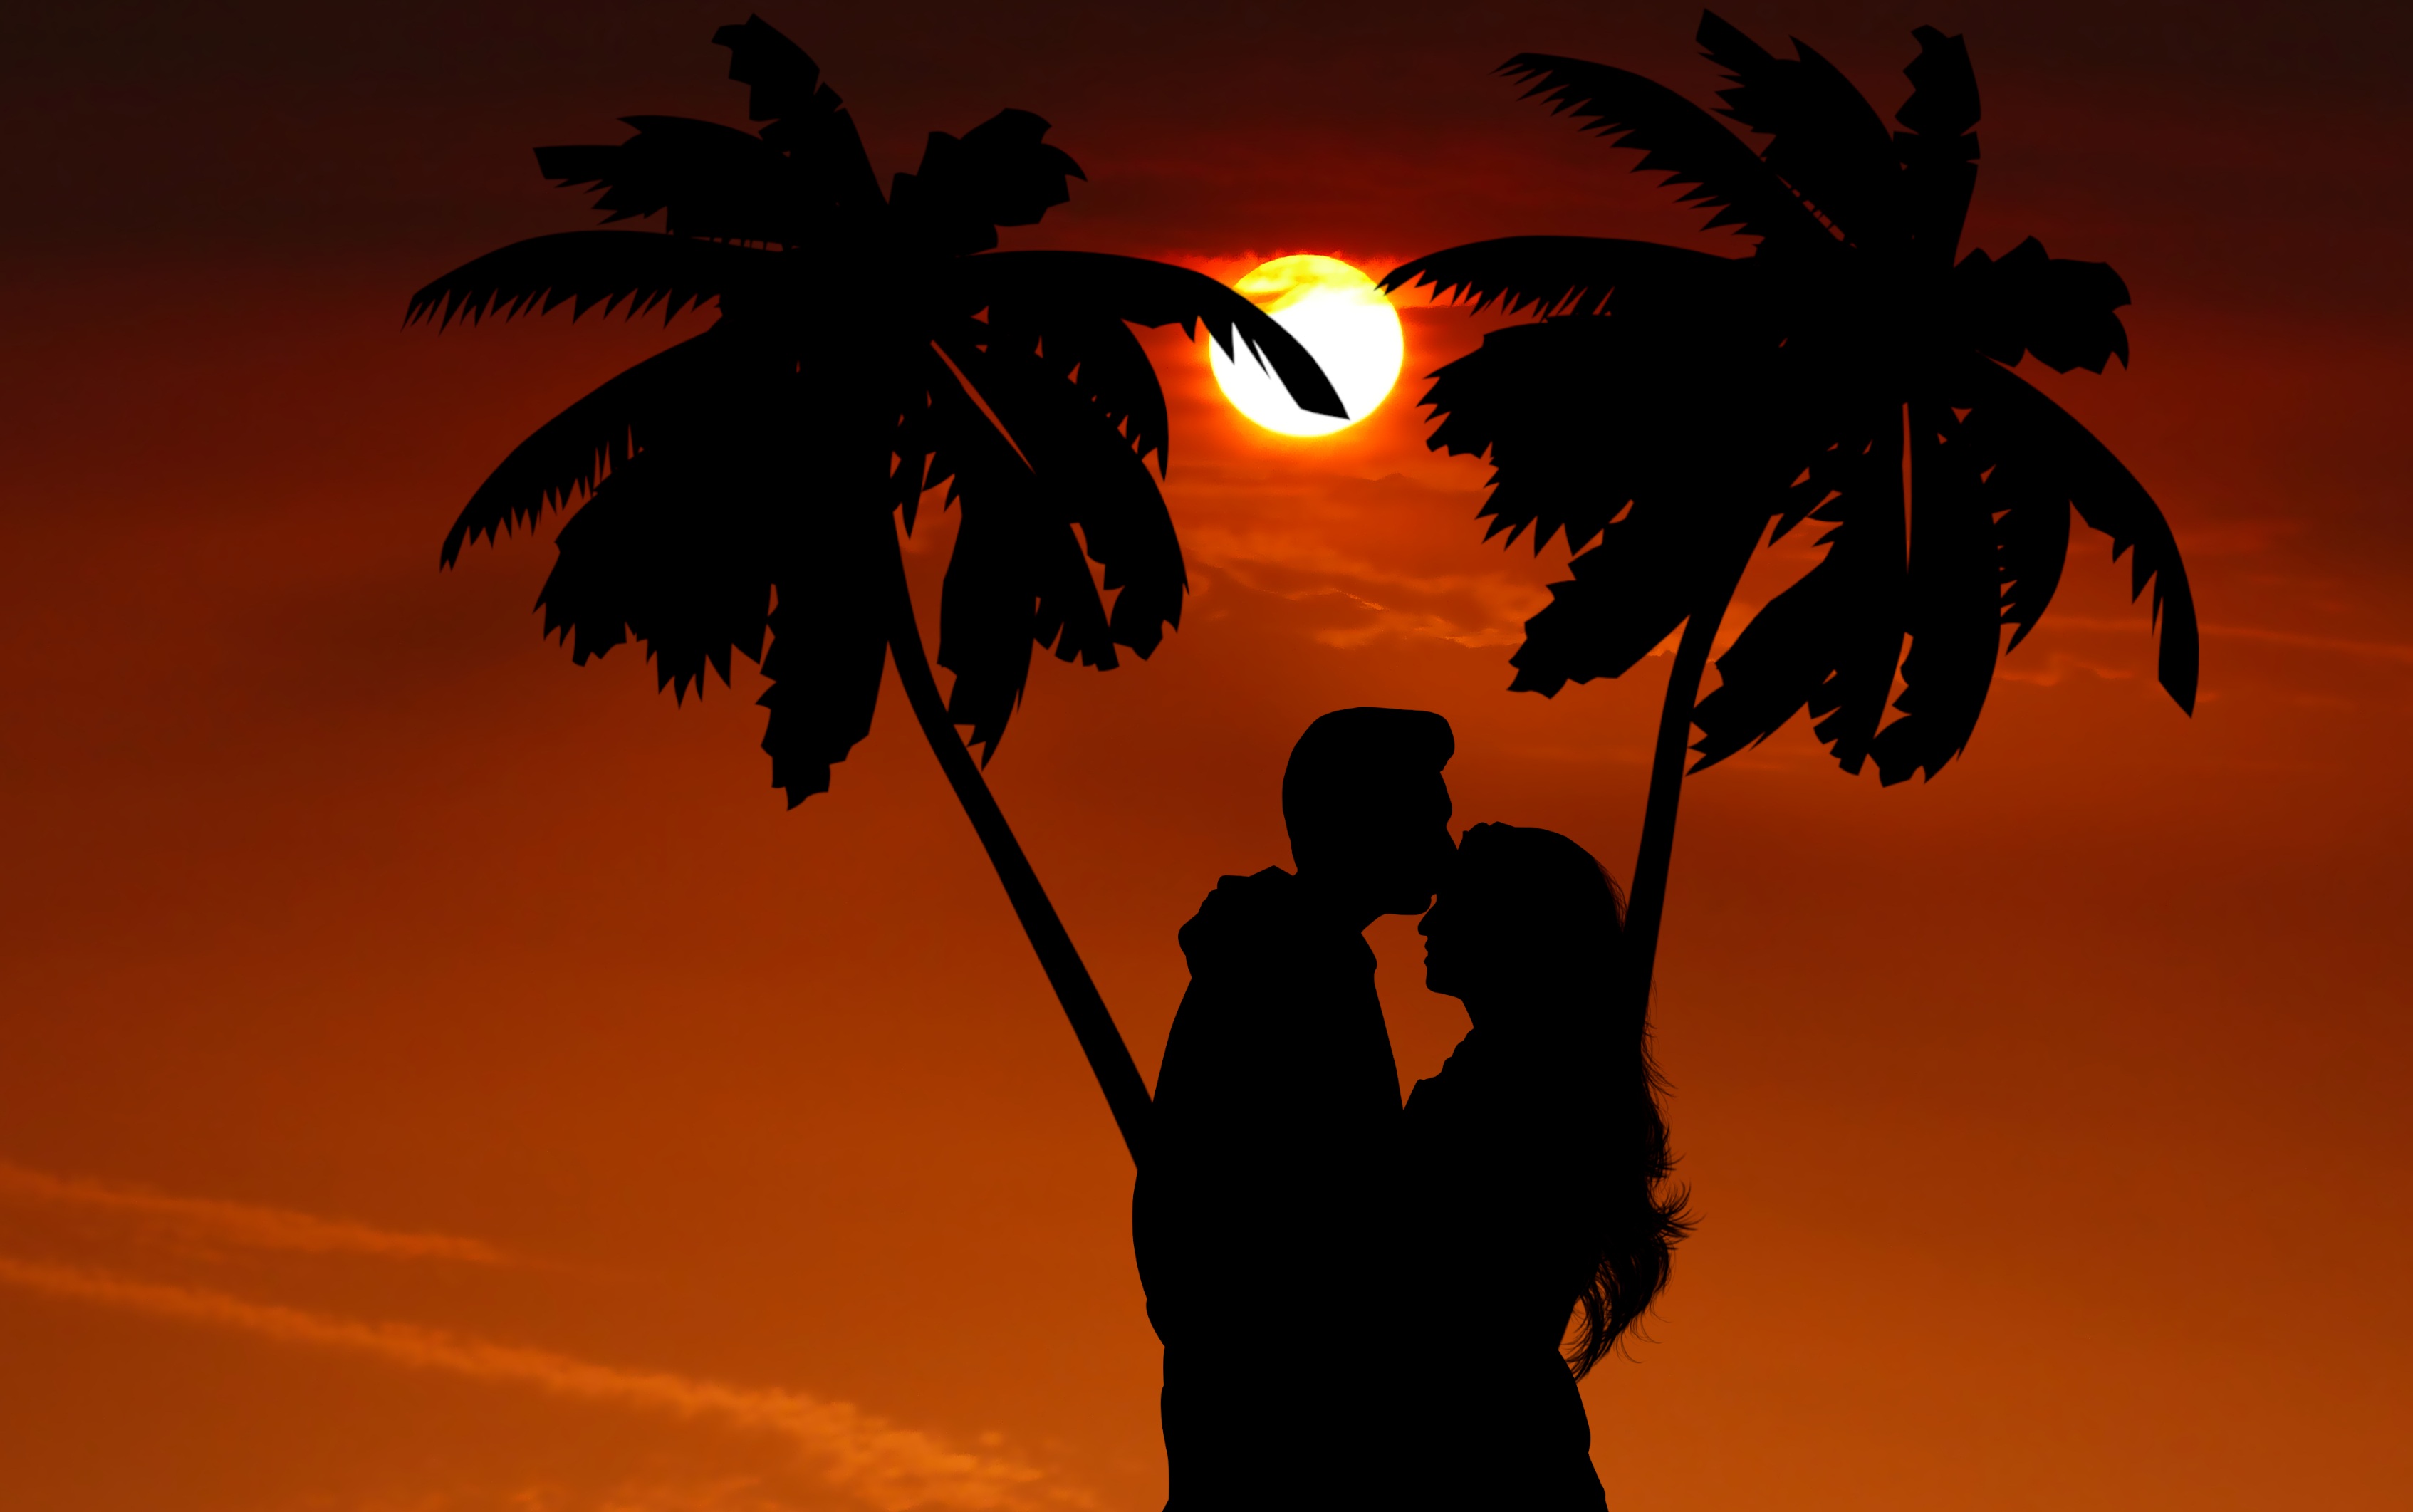 romance, love, couple, embrace, silhouettes, pair, night, palms